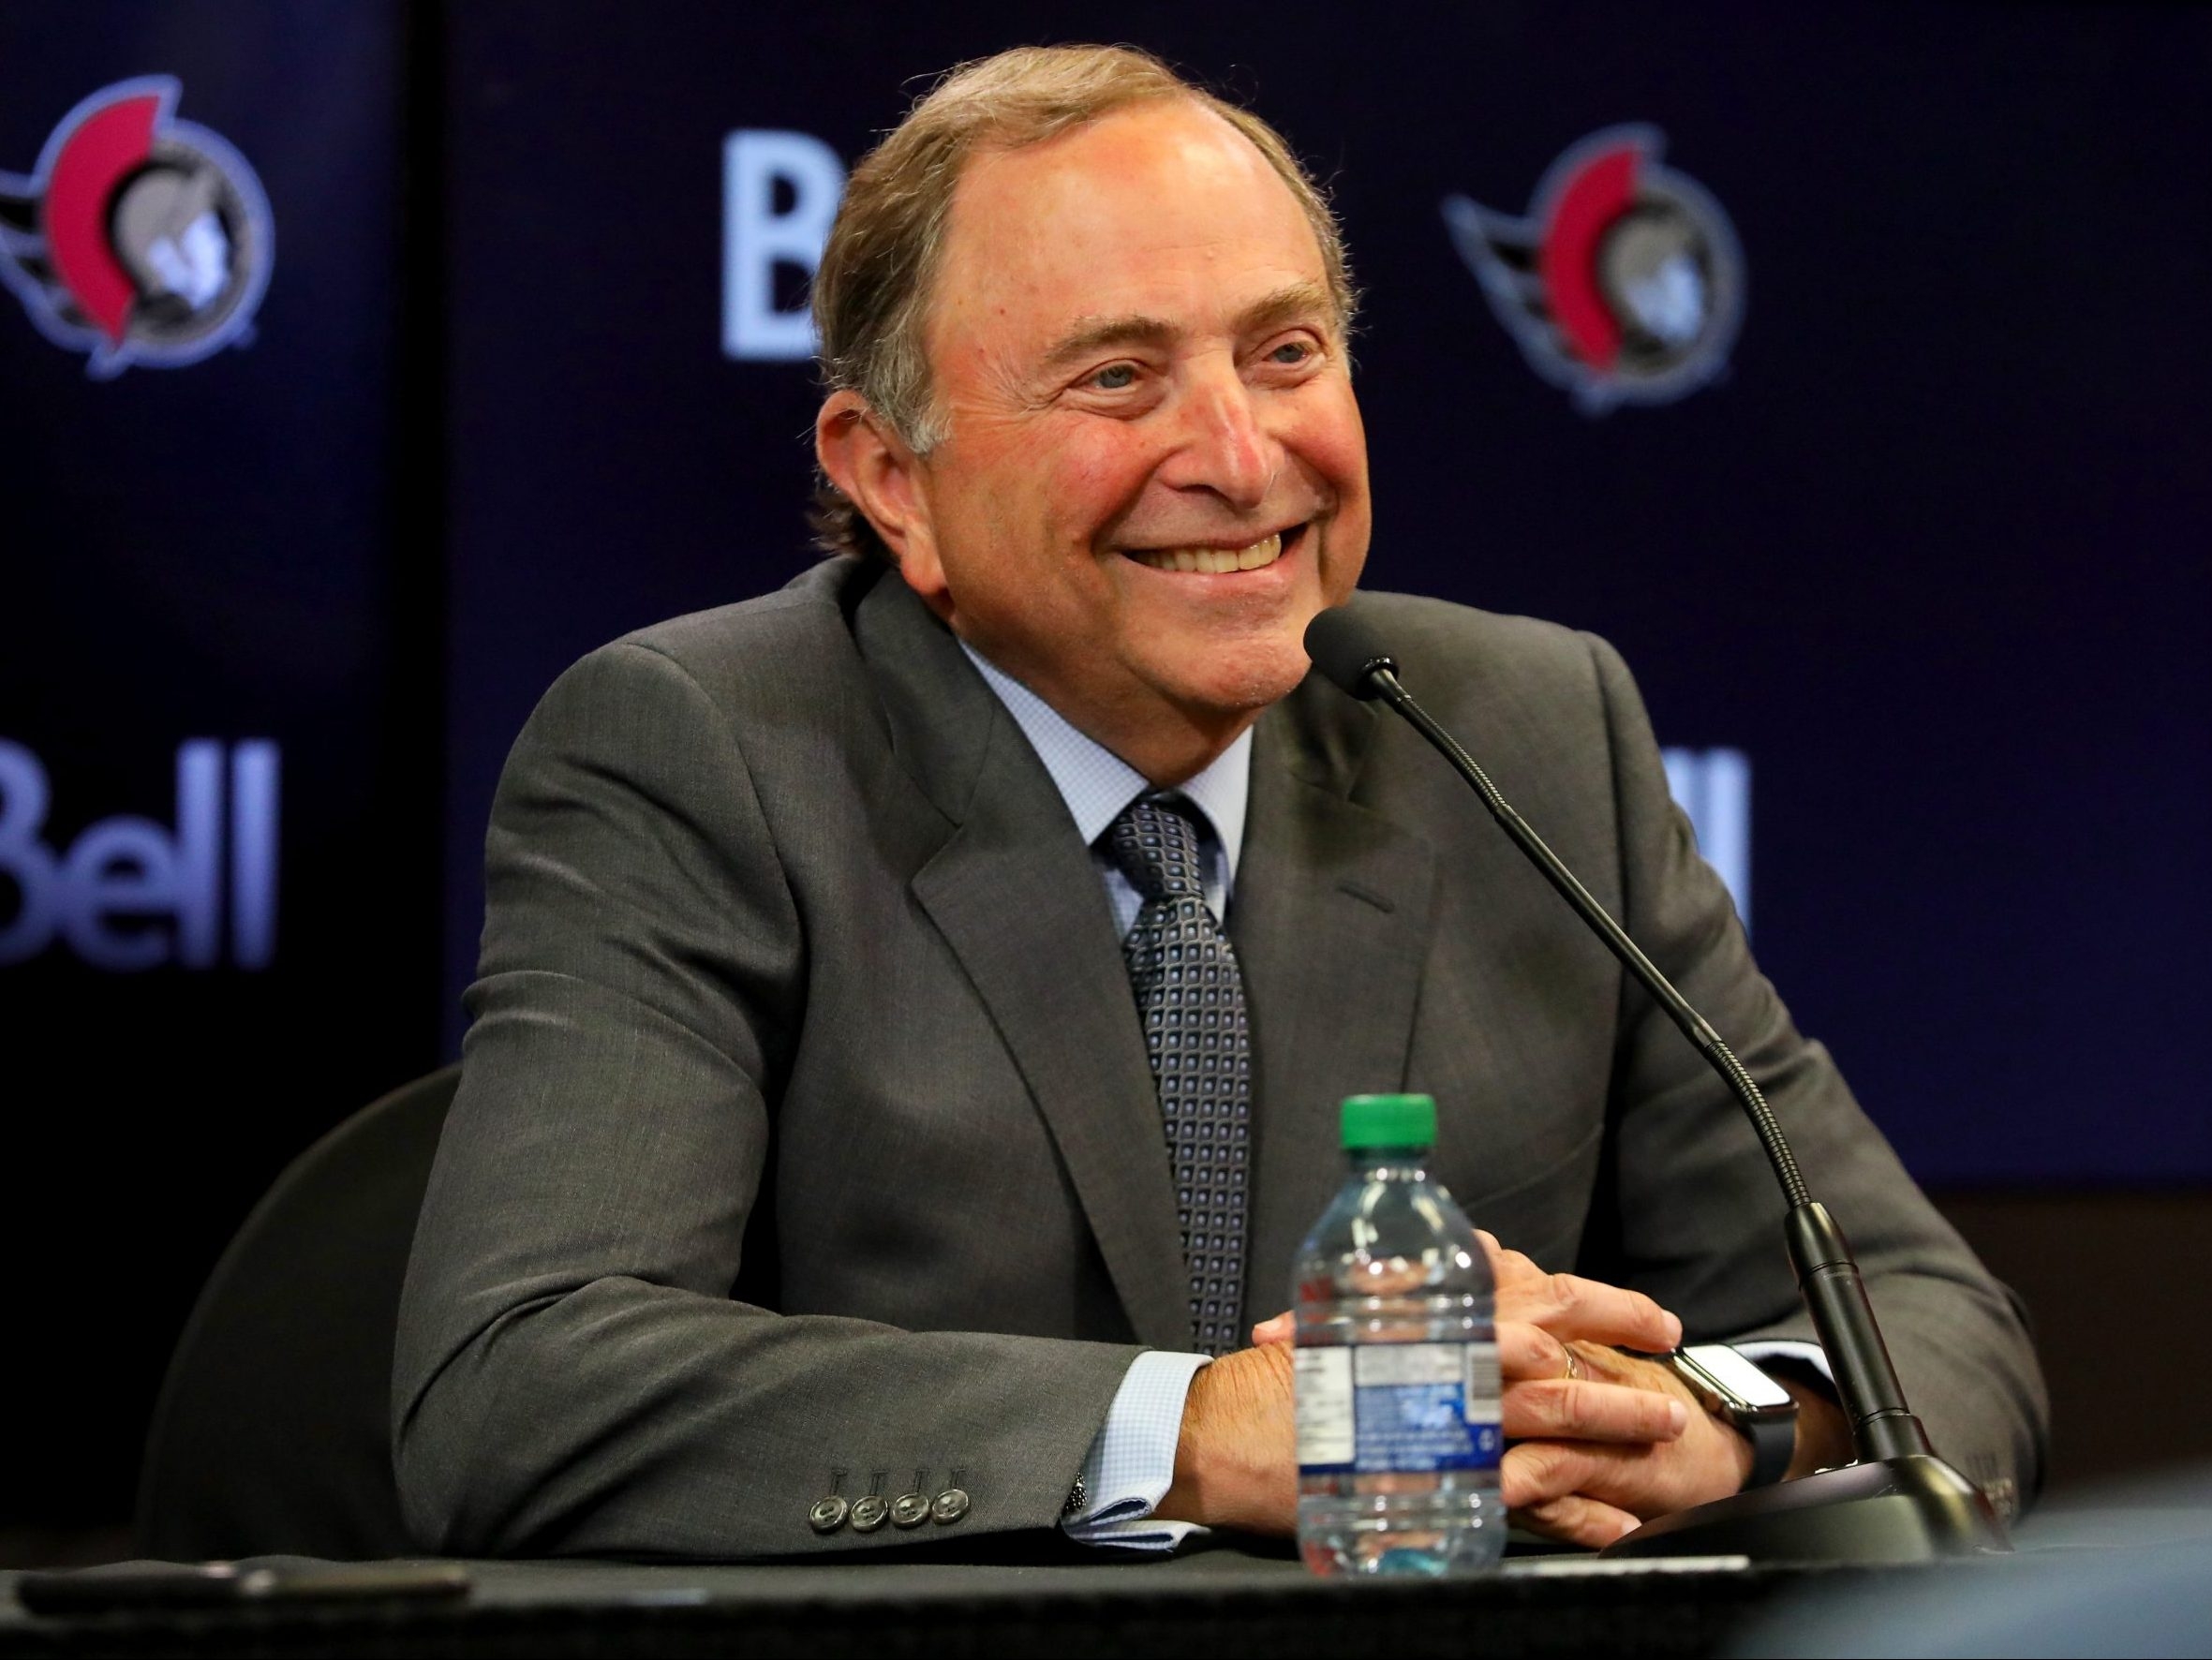 GARRIOCH: NHL commissioner Gary Bettman says the sale of the Ottawa Senators is on track